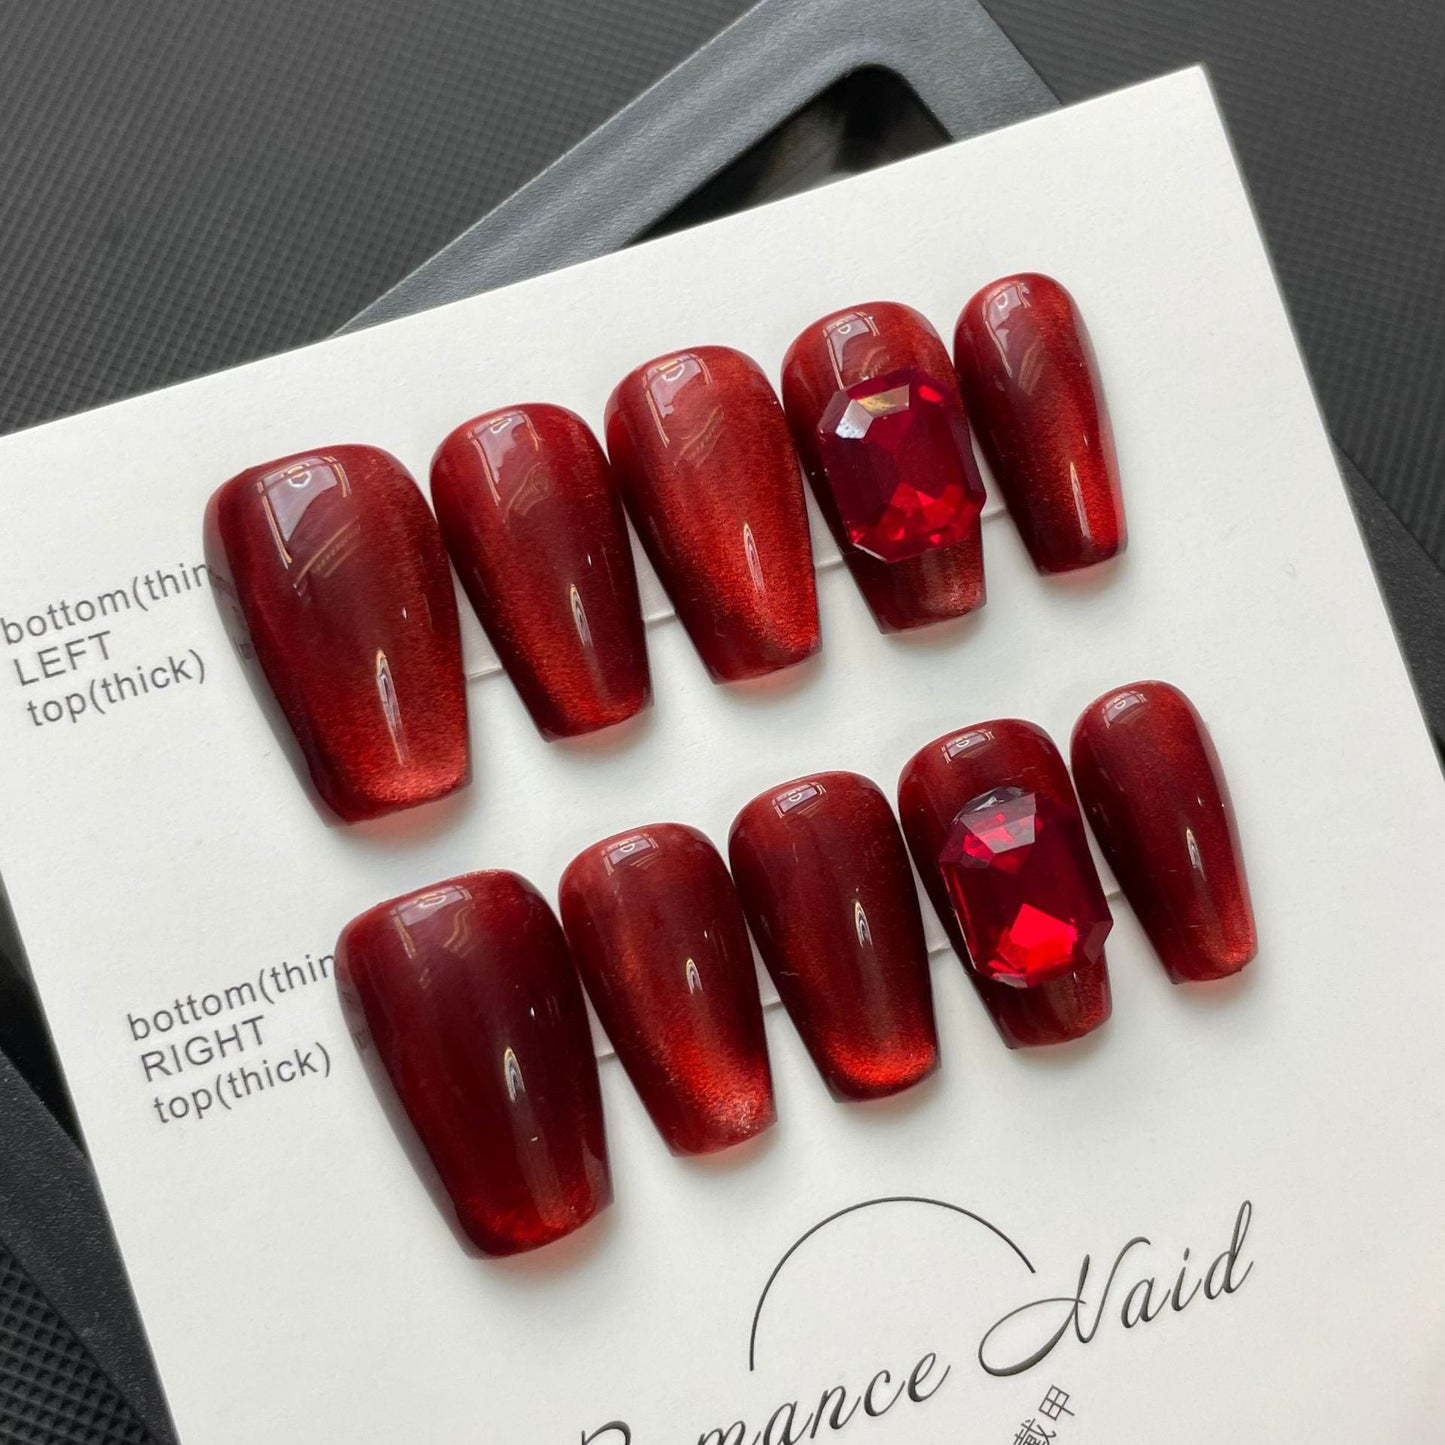 589 Red Cateye Effect press on nagels 100% handgemaakte kunstnagels rood